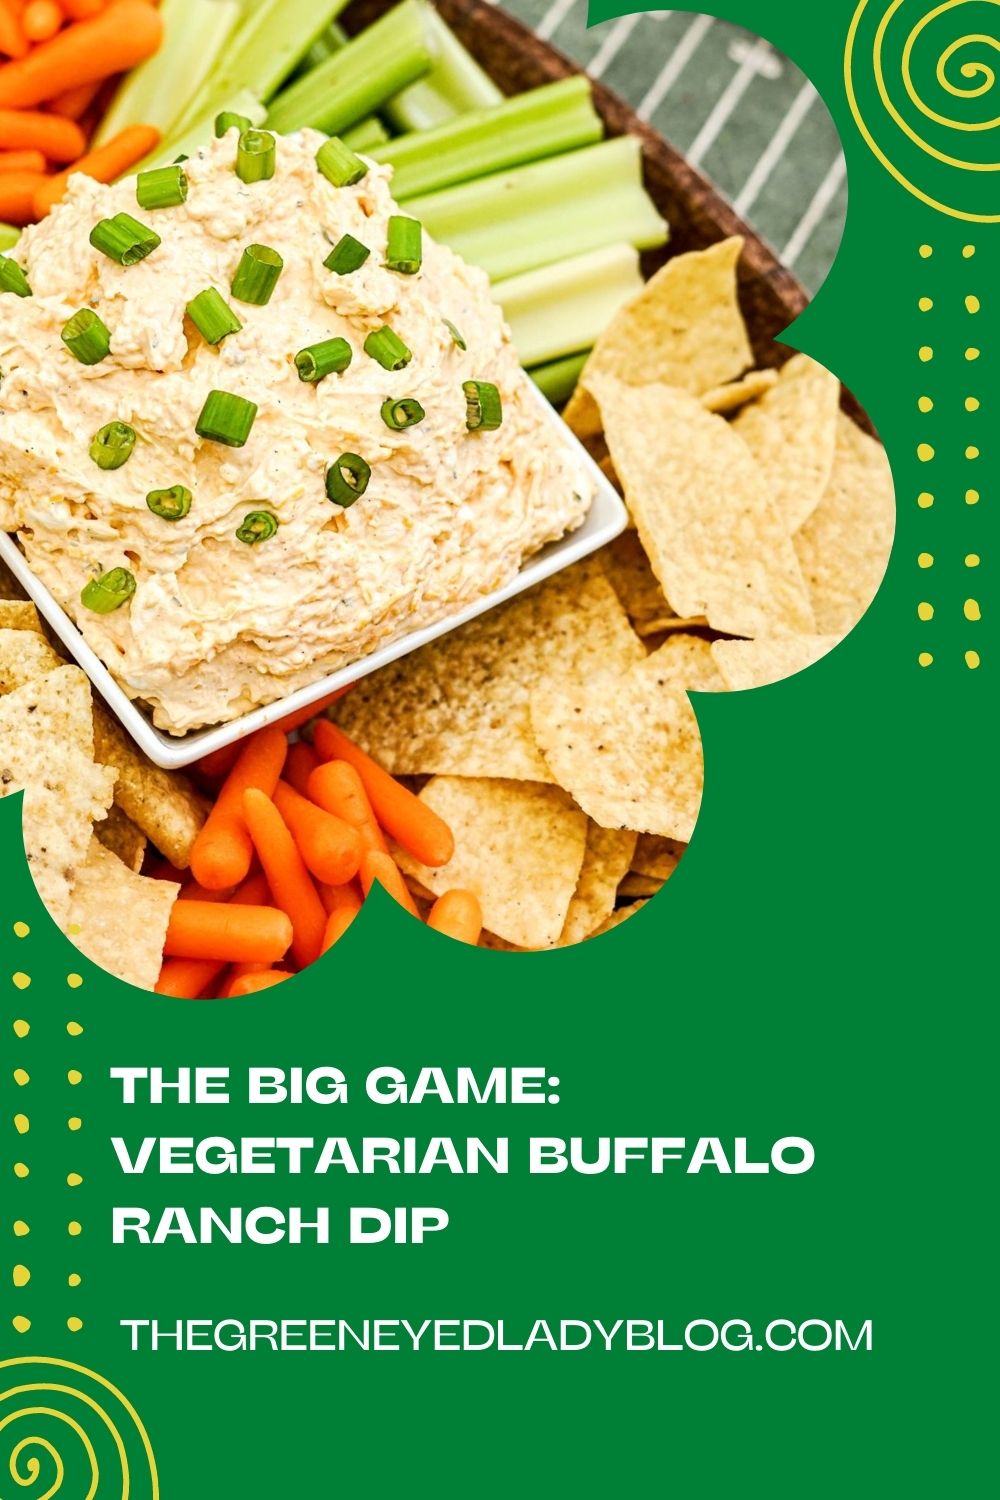 The Big Game: Vegetarian Buffalo Ranch Dip